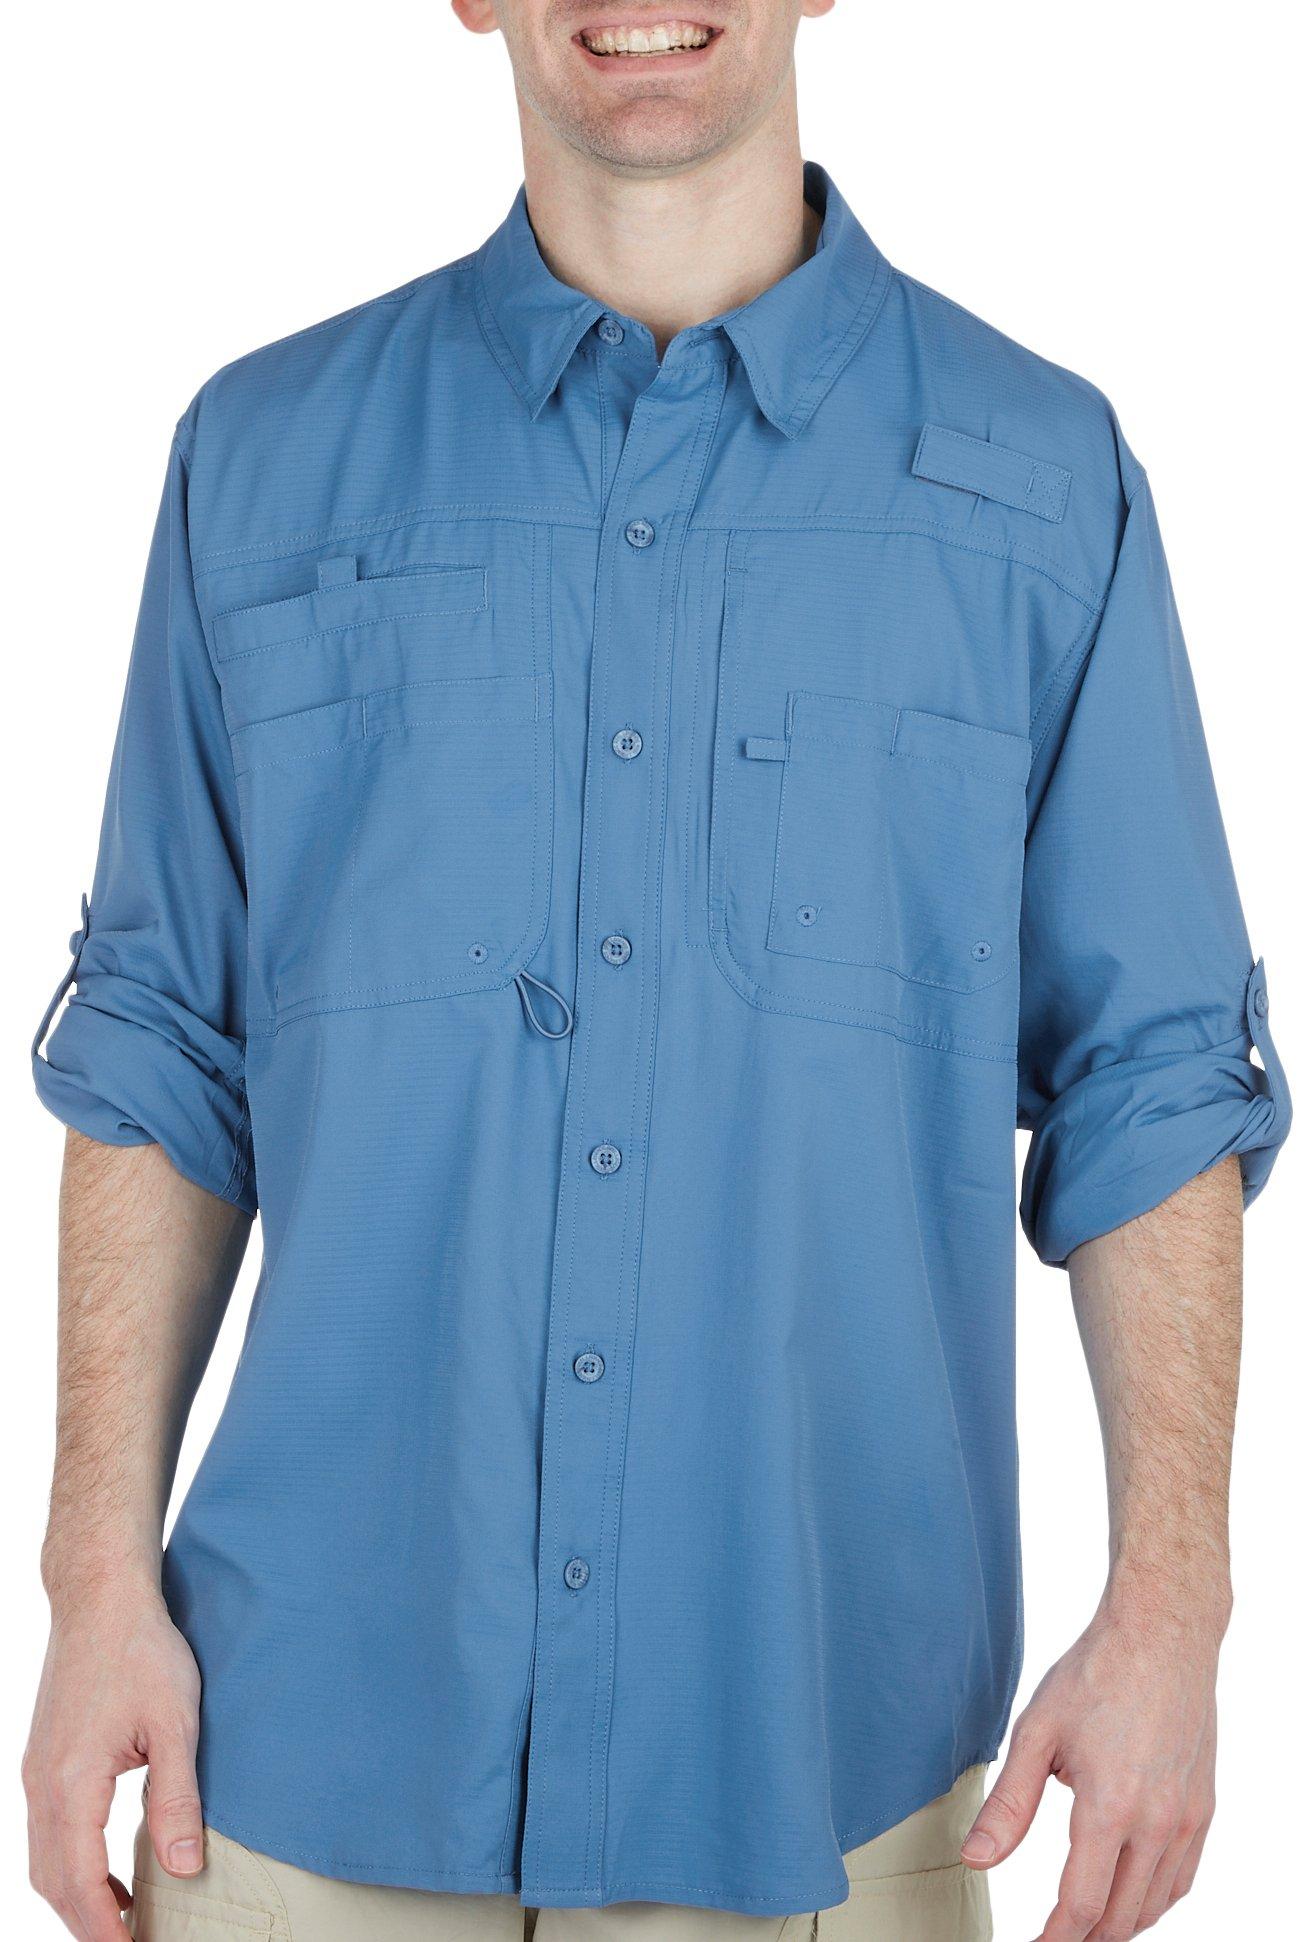 Reel Legends Mens Saltwater II Long Sleeve Fishing Shirt - Marina Blue - XX-Large